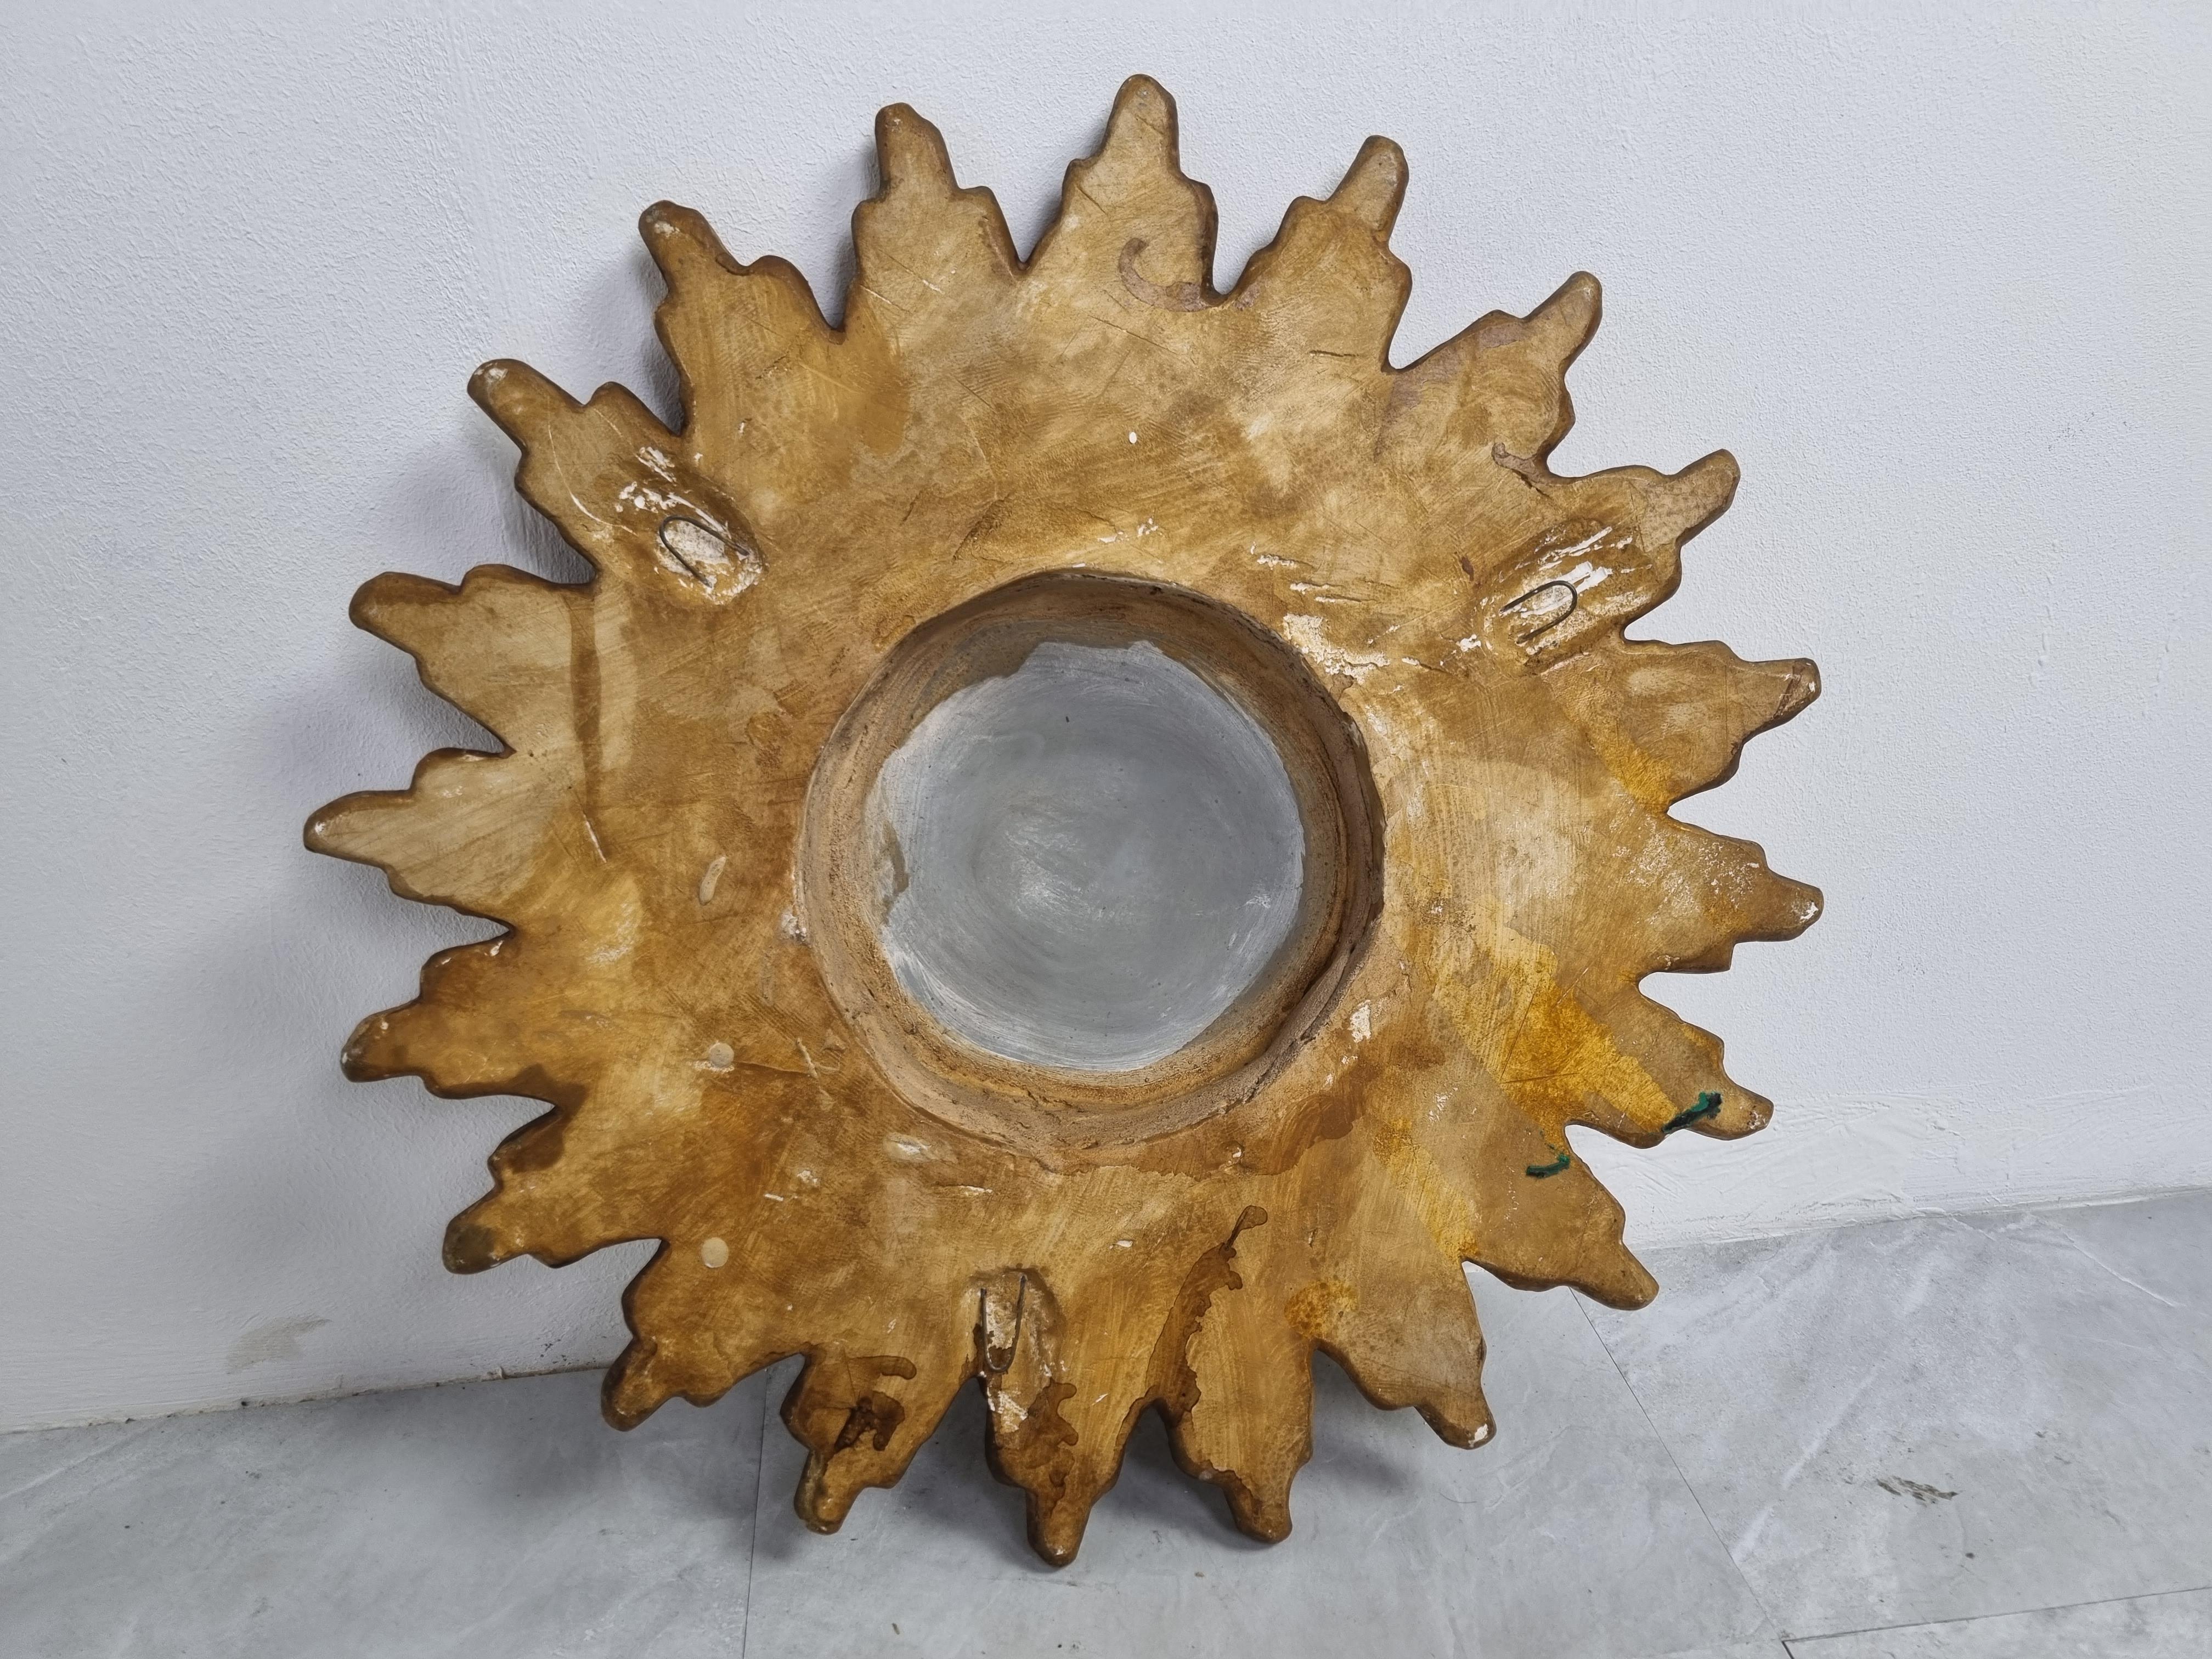 Rare terracotta sunburst mirror with a convex mirror glass.

The mirror is in a good vintage condition.

1960s - Belgium

Dimensions:

Diameter: 42cm/16.53